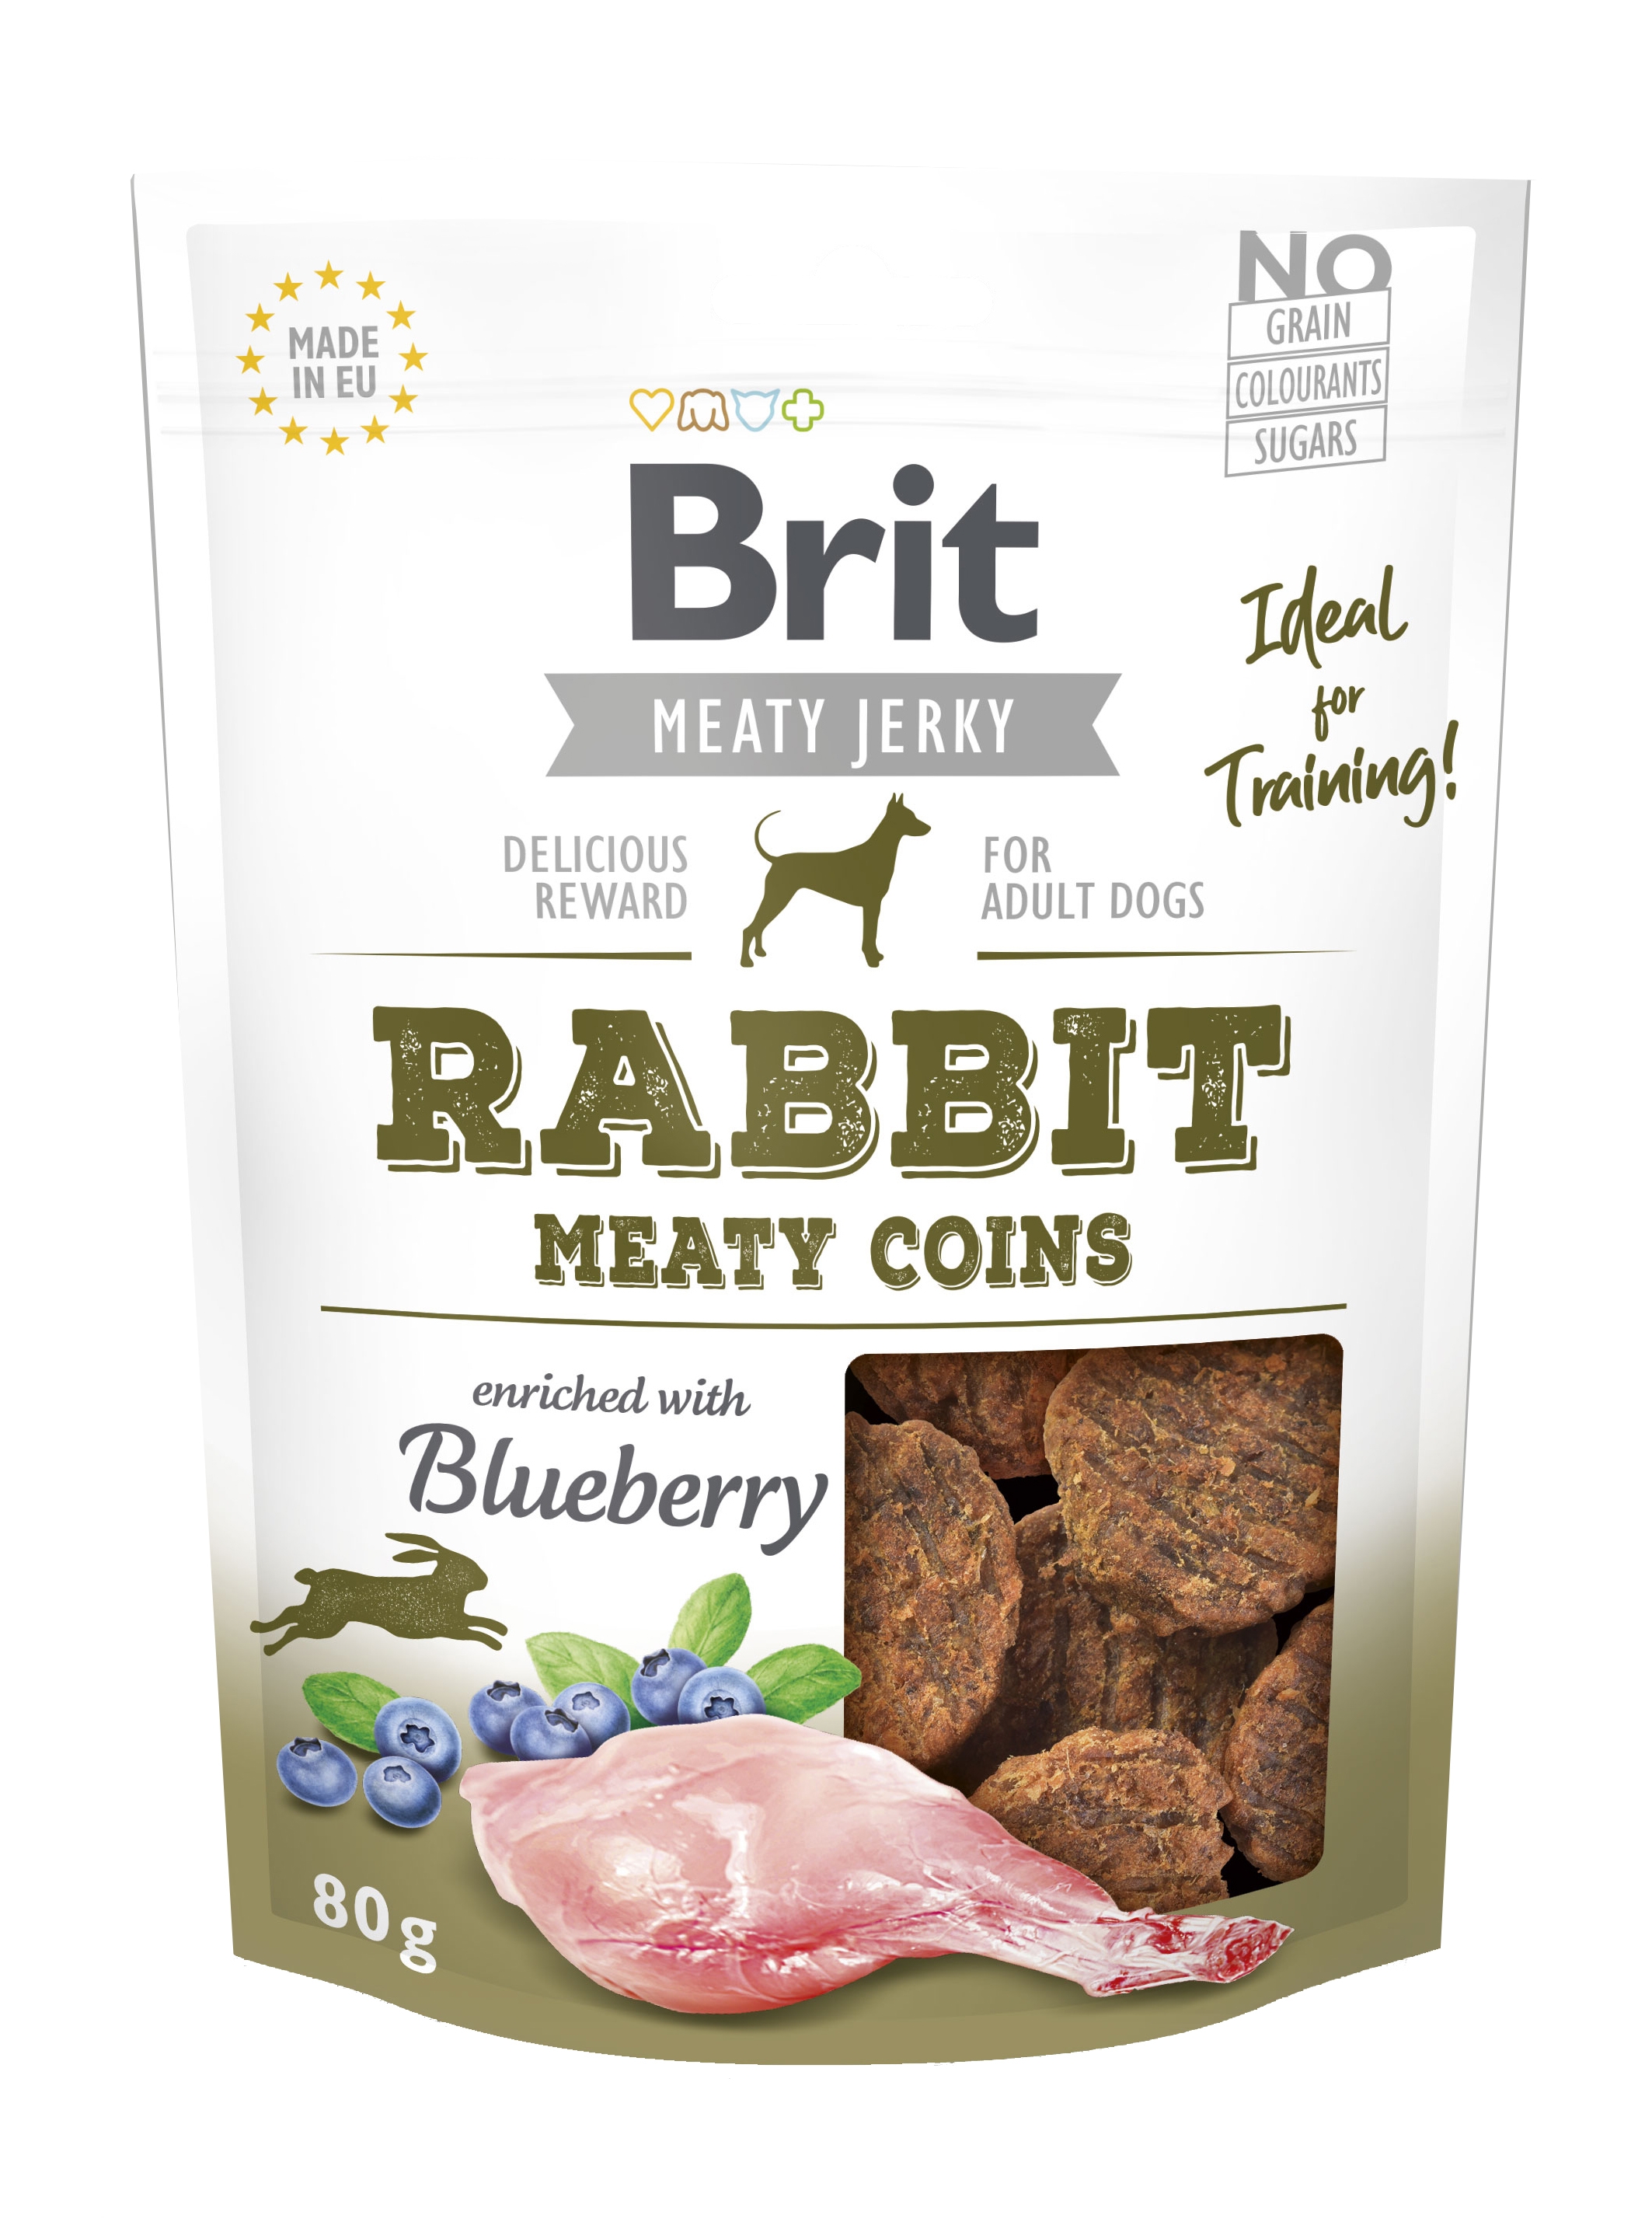 Brit Dog Jerky Rabbit Meaty Coins, 80 g Brit